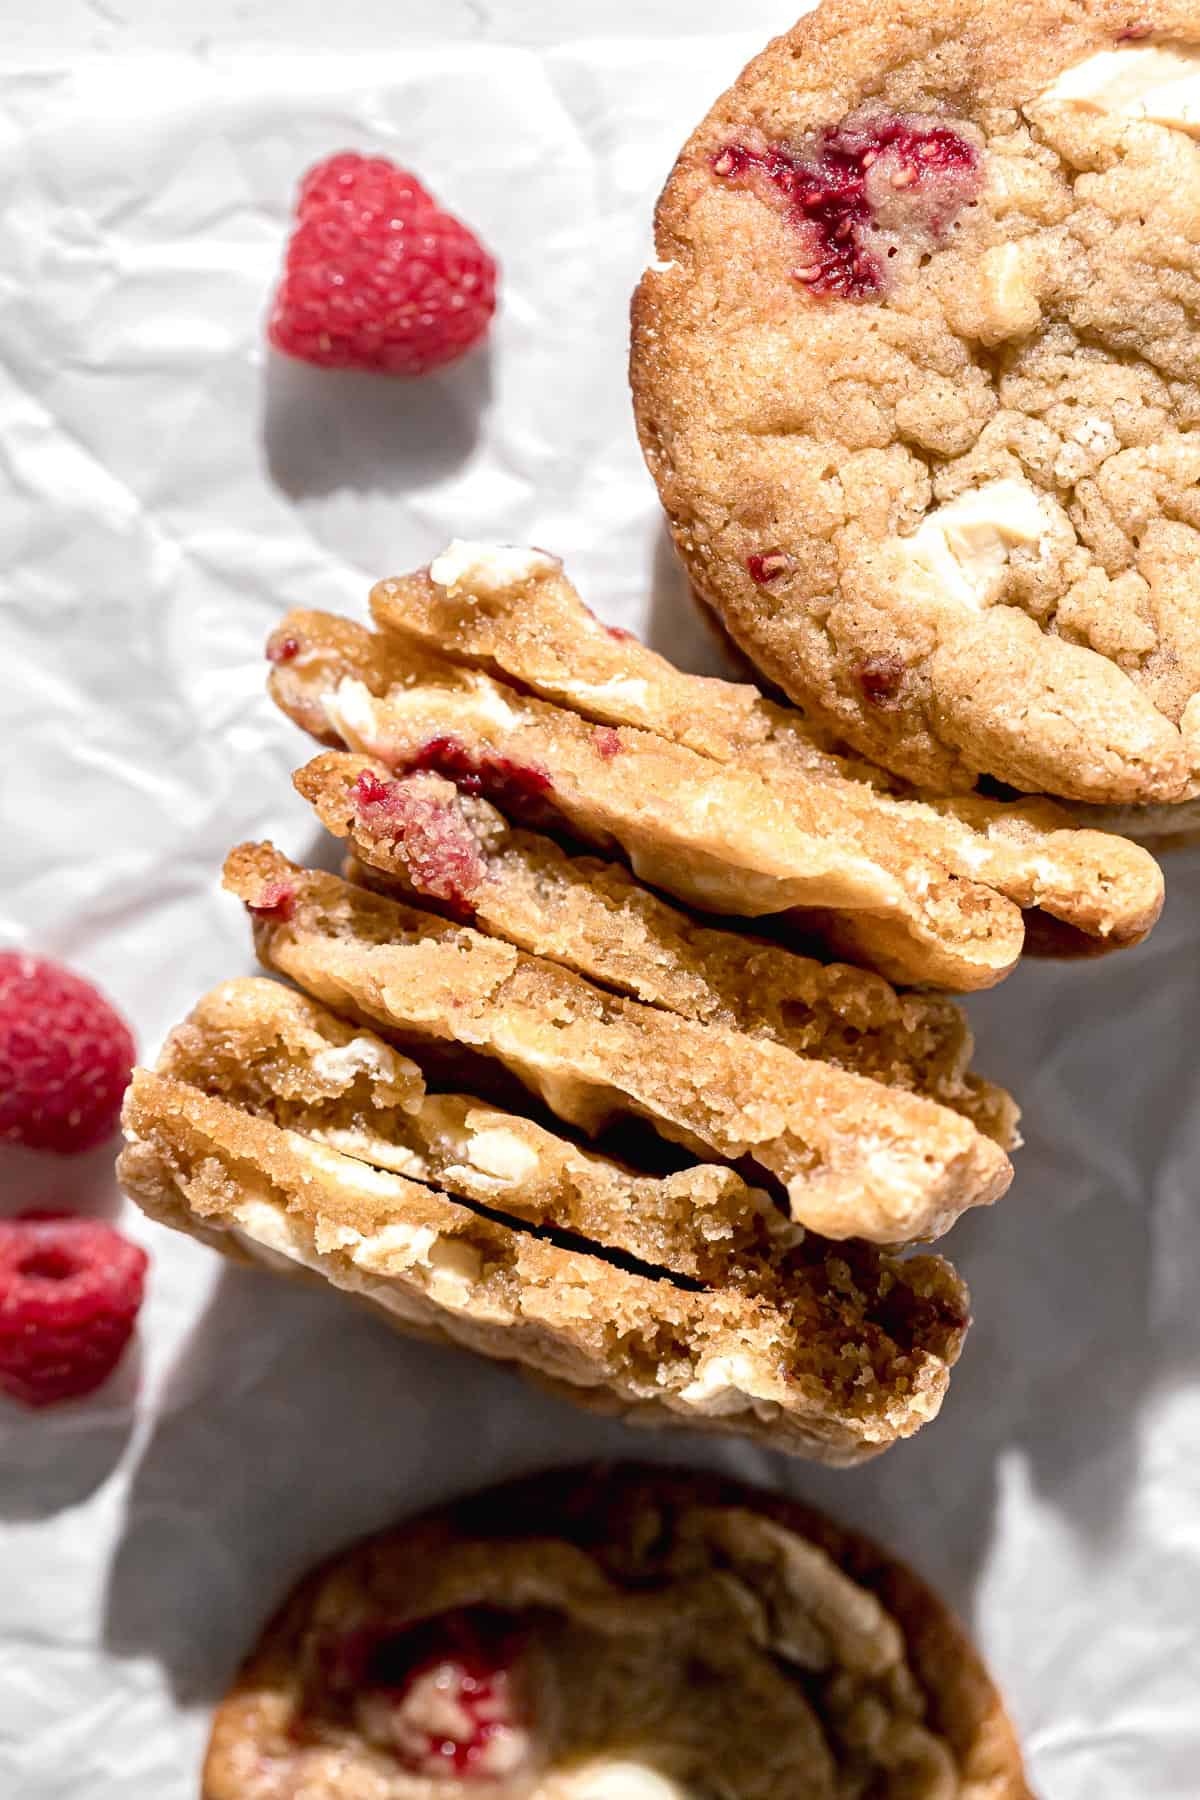 raspberry white chocolate cookies broken in half to show inside texture